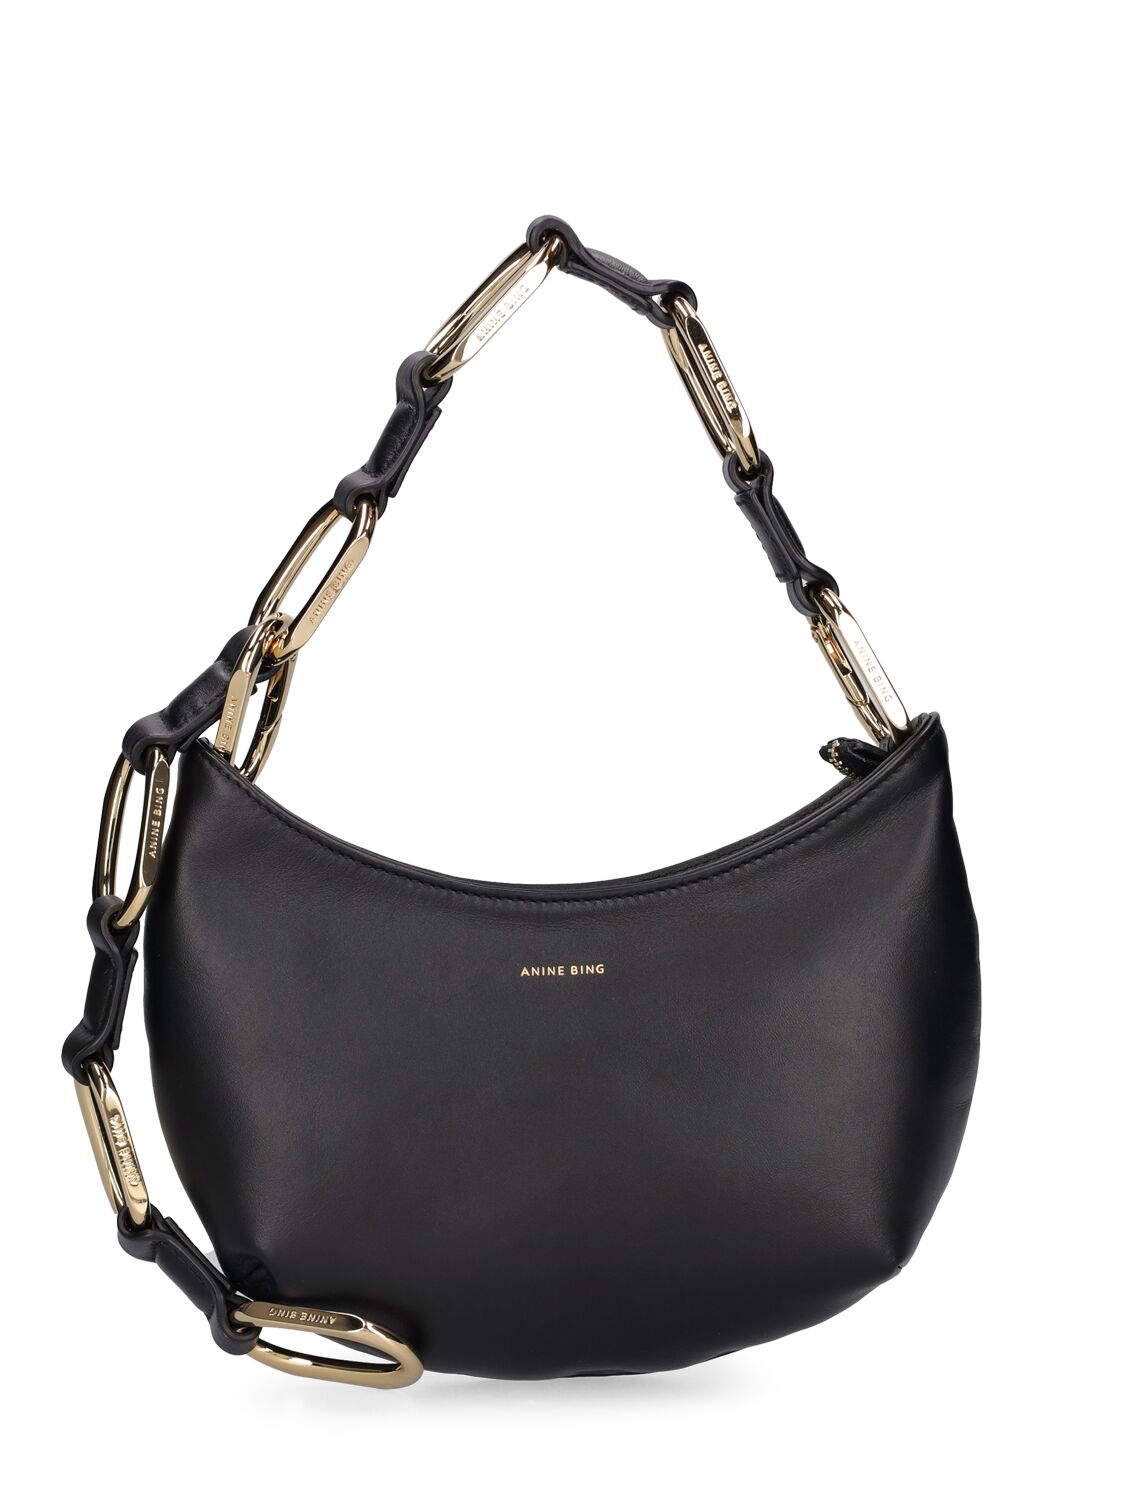 Anine Bing Mini Jody Leather Top Handle Bag In Black